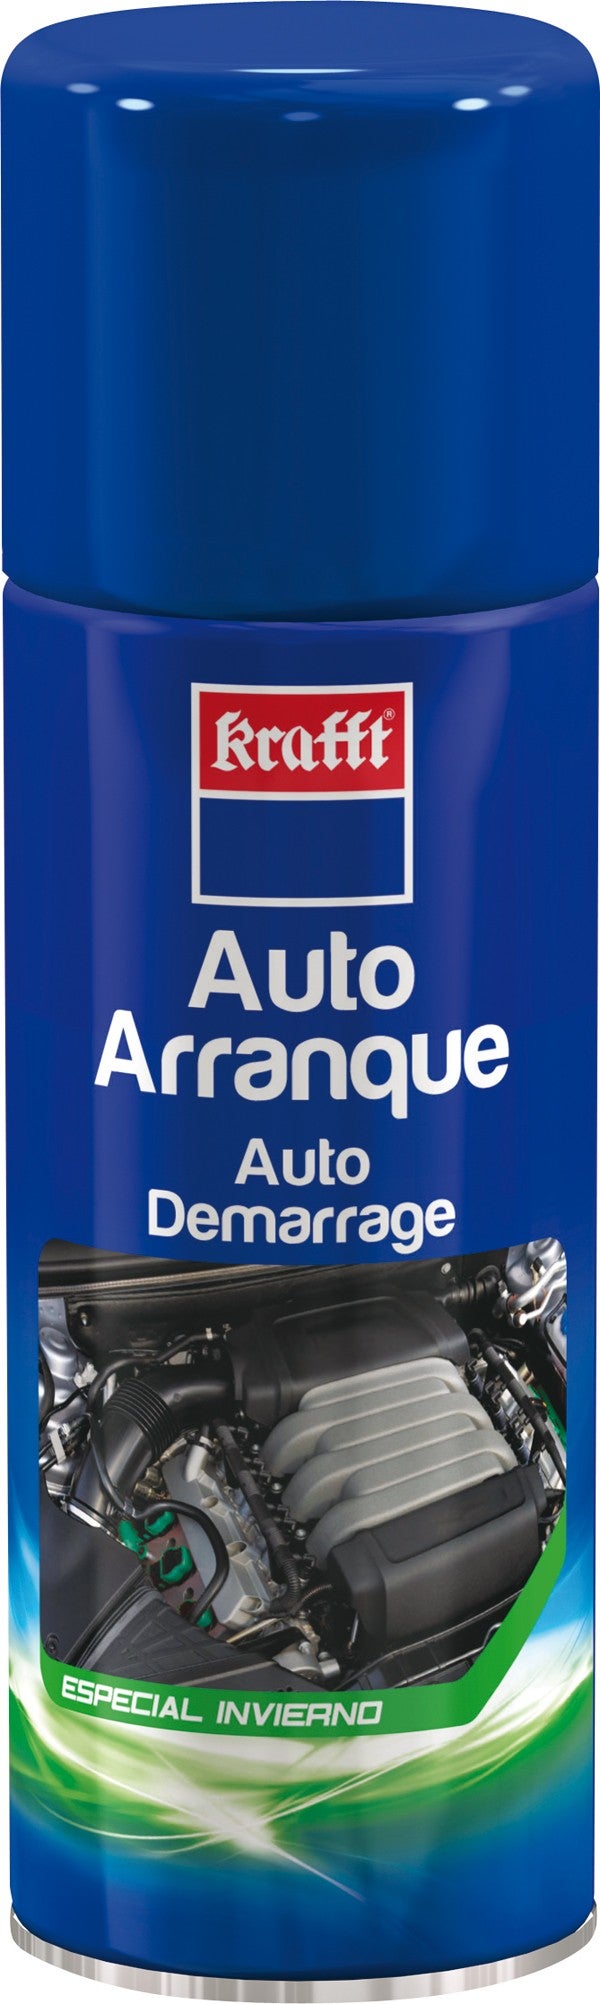 Autoarranque Krafft 200ml - Norauto